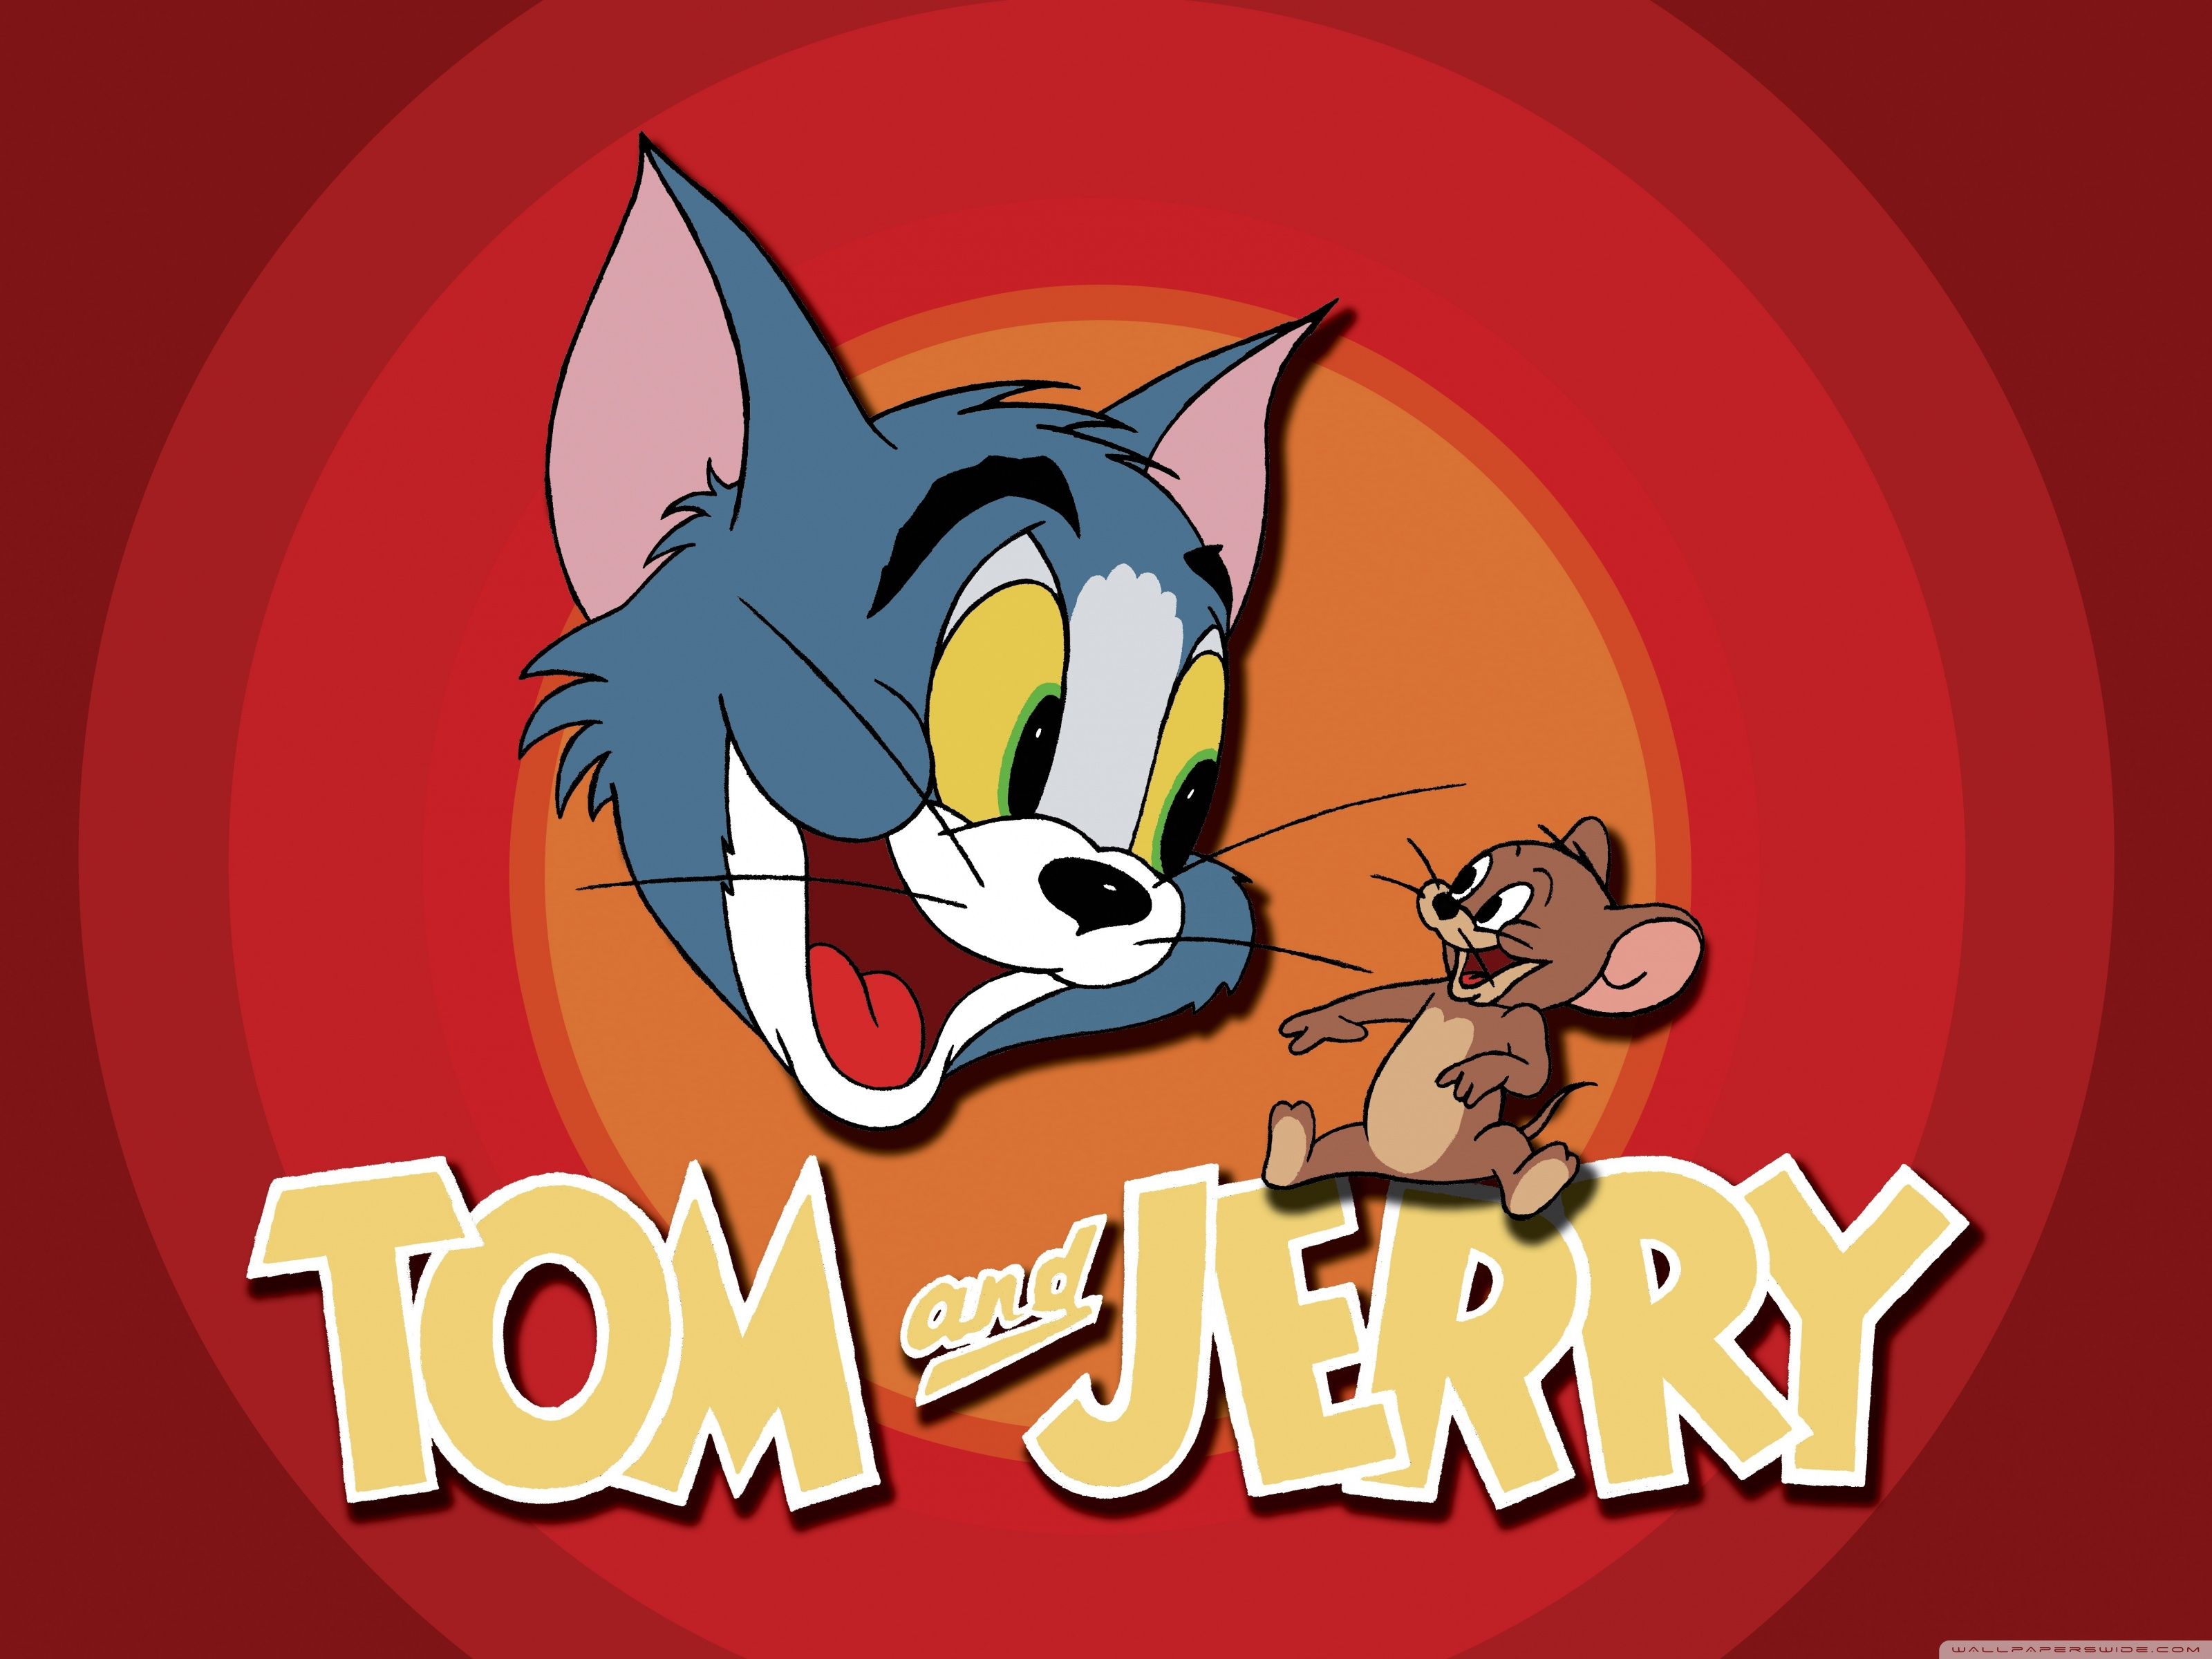 Vintage Tom And Jerry Wallpaper iPhonewalpaperlist.com